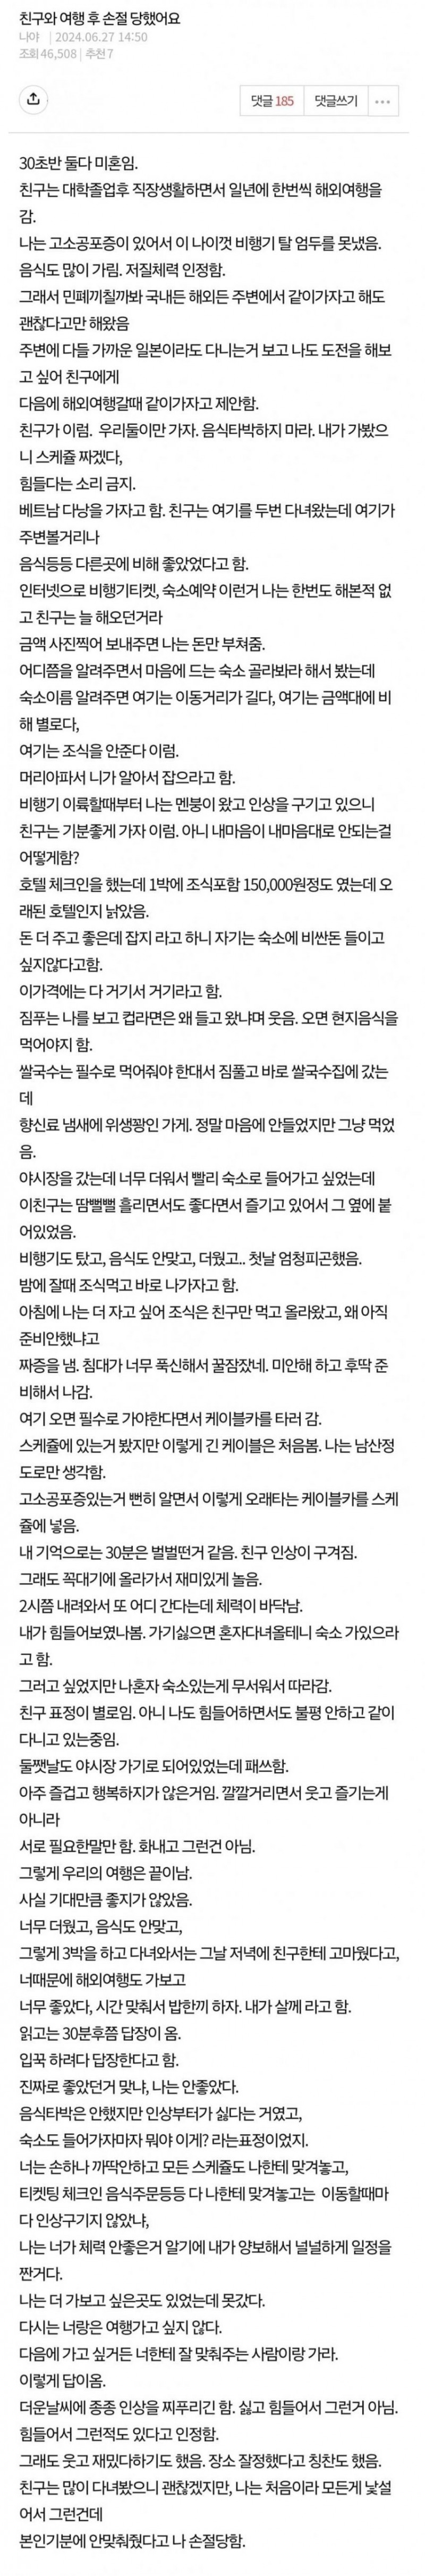 nokbeon.net-친구와 여행다녀와서 손절당함-1번 이미지